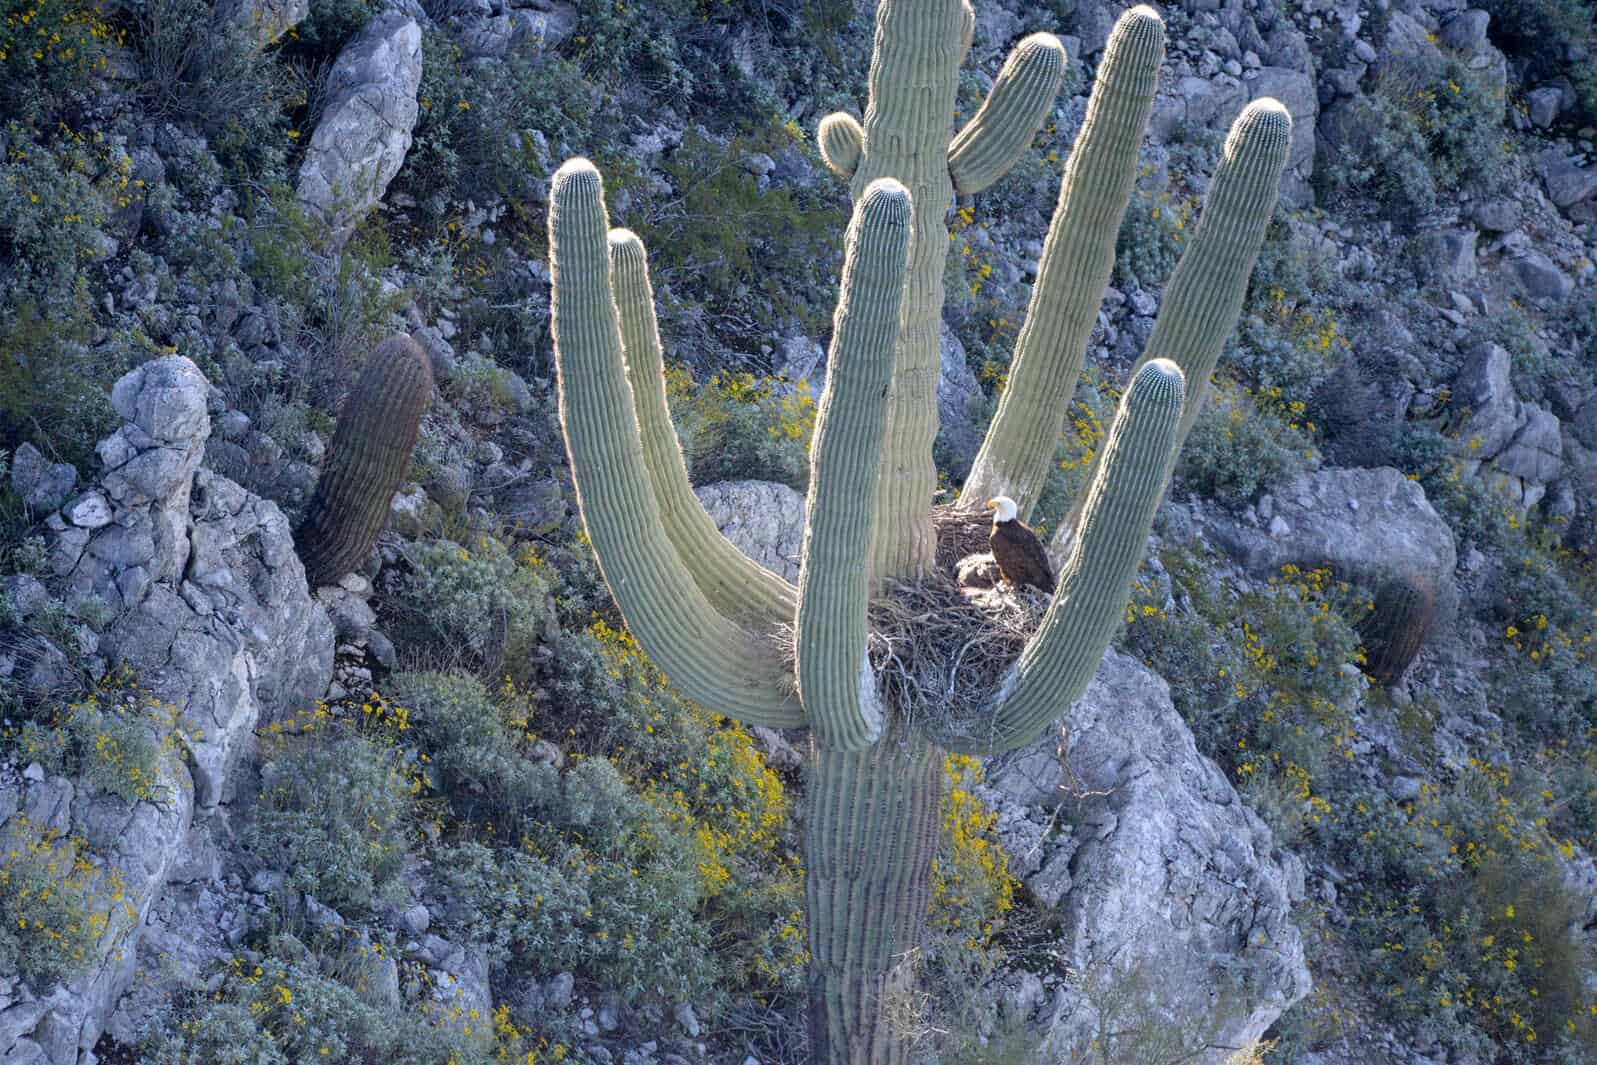 Prickly Pair: Cactus-dwelling Couple Prove Rumors That Bald Eagles Nest in Saguaros